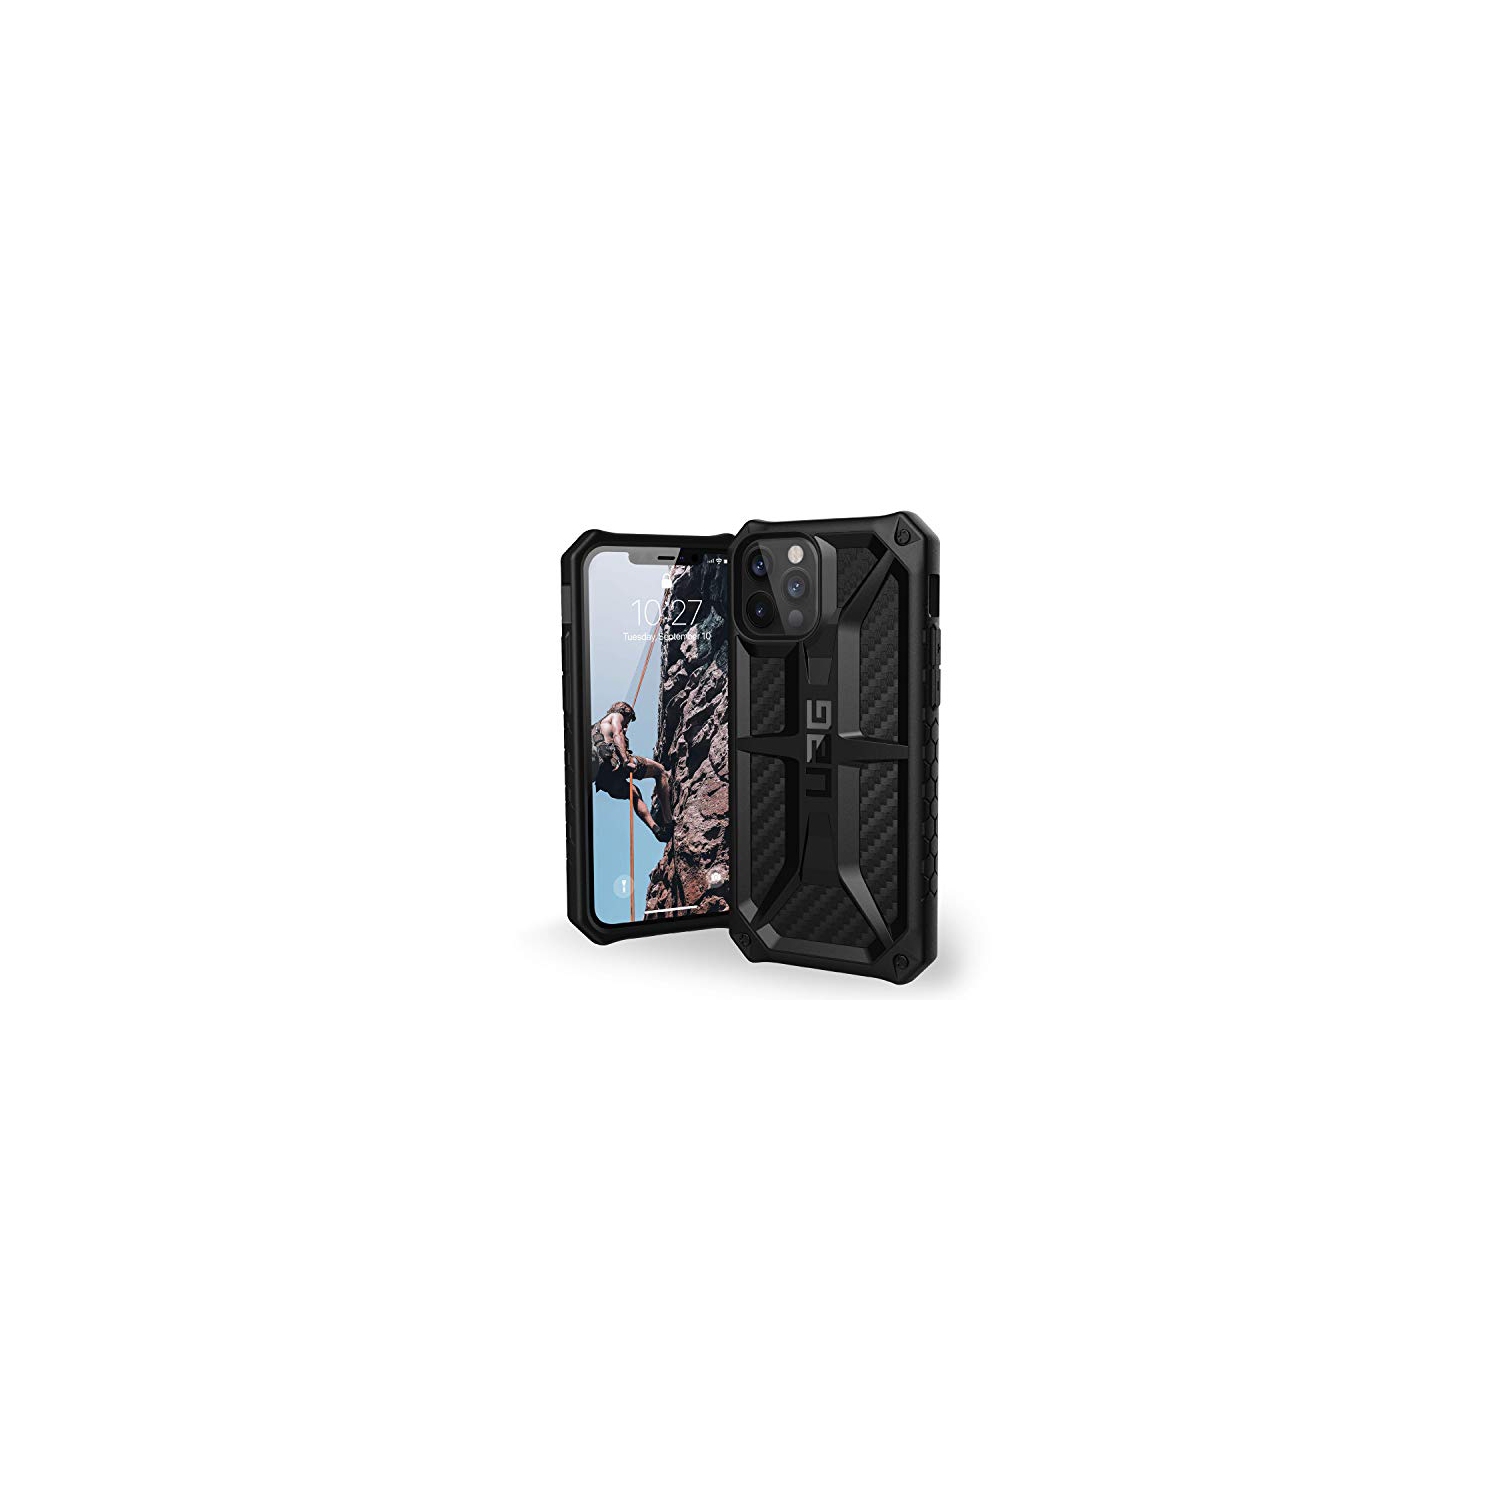 URBAN ARMOR GEAR UAG Designed for iPhone 12 Case/iPhone 12 Pro Case [6.1-inch Screen] Rugged Lightweight Slim Shockproof Pr...